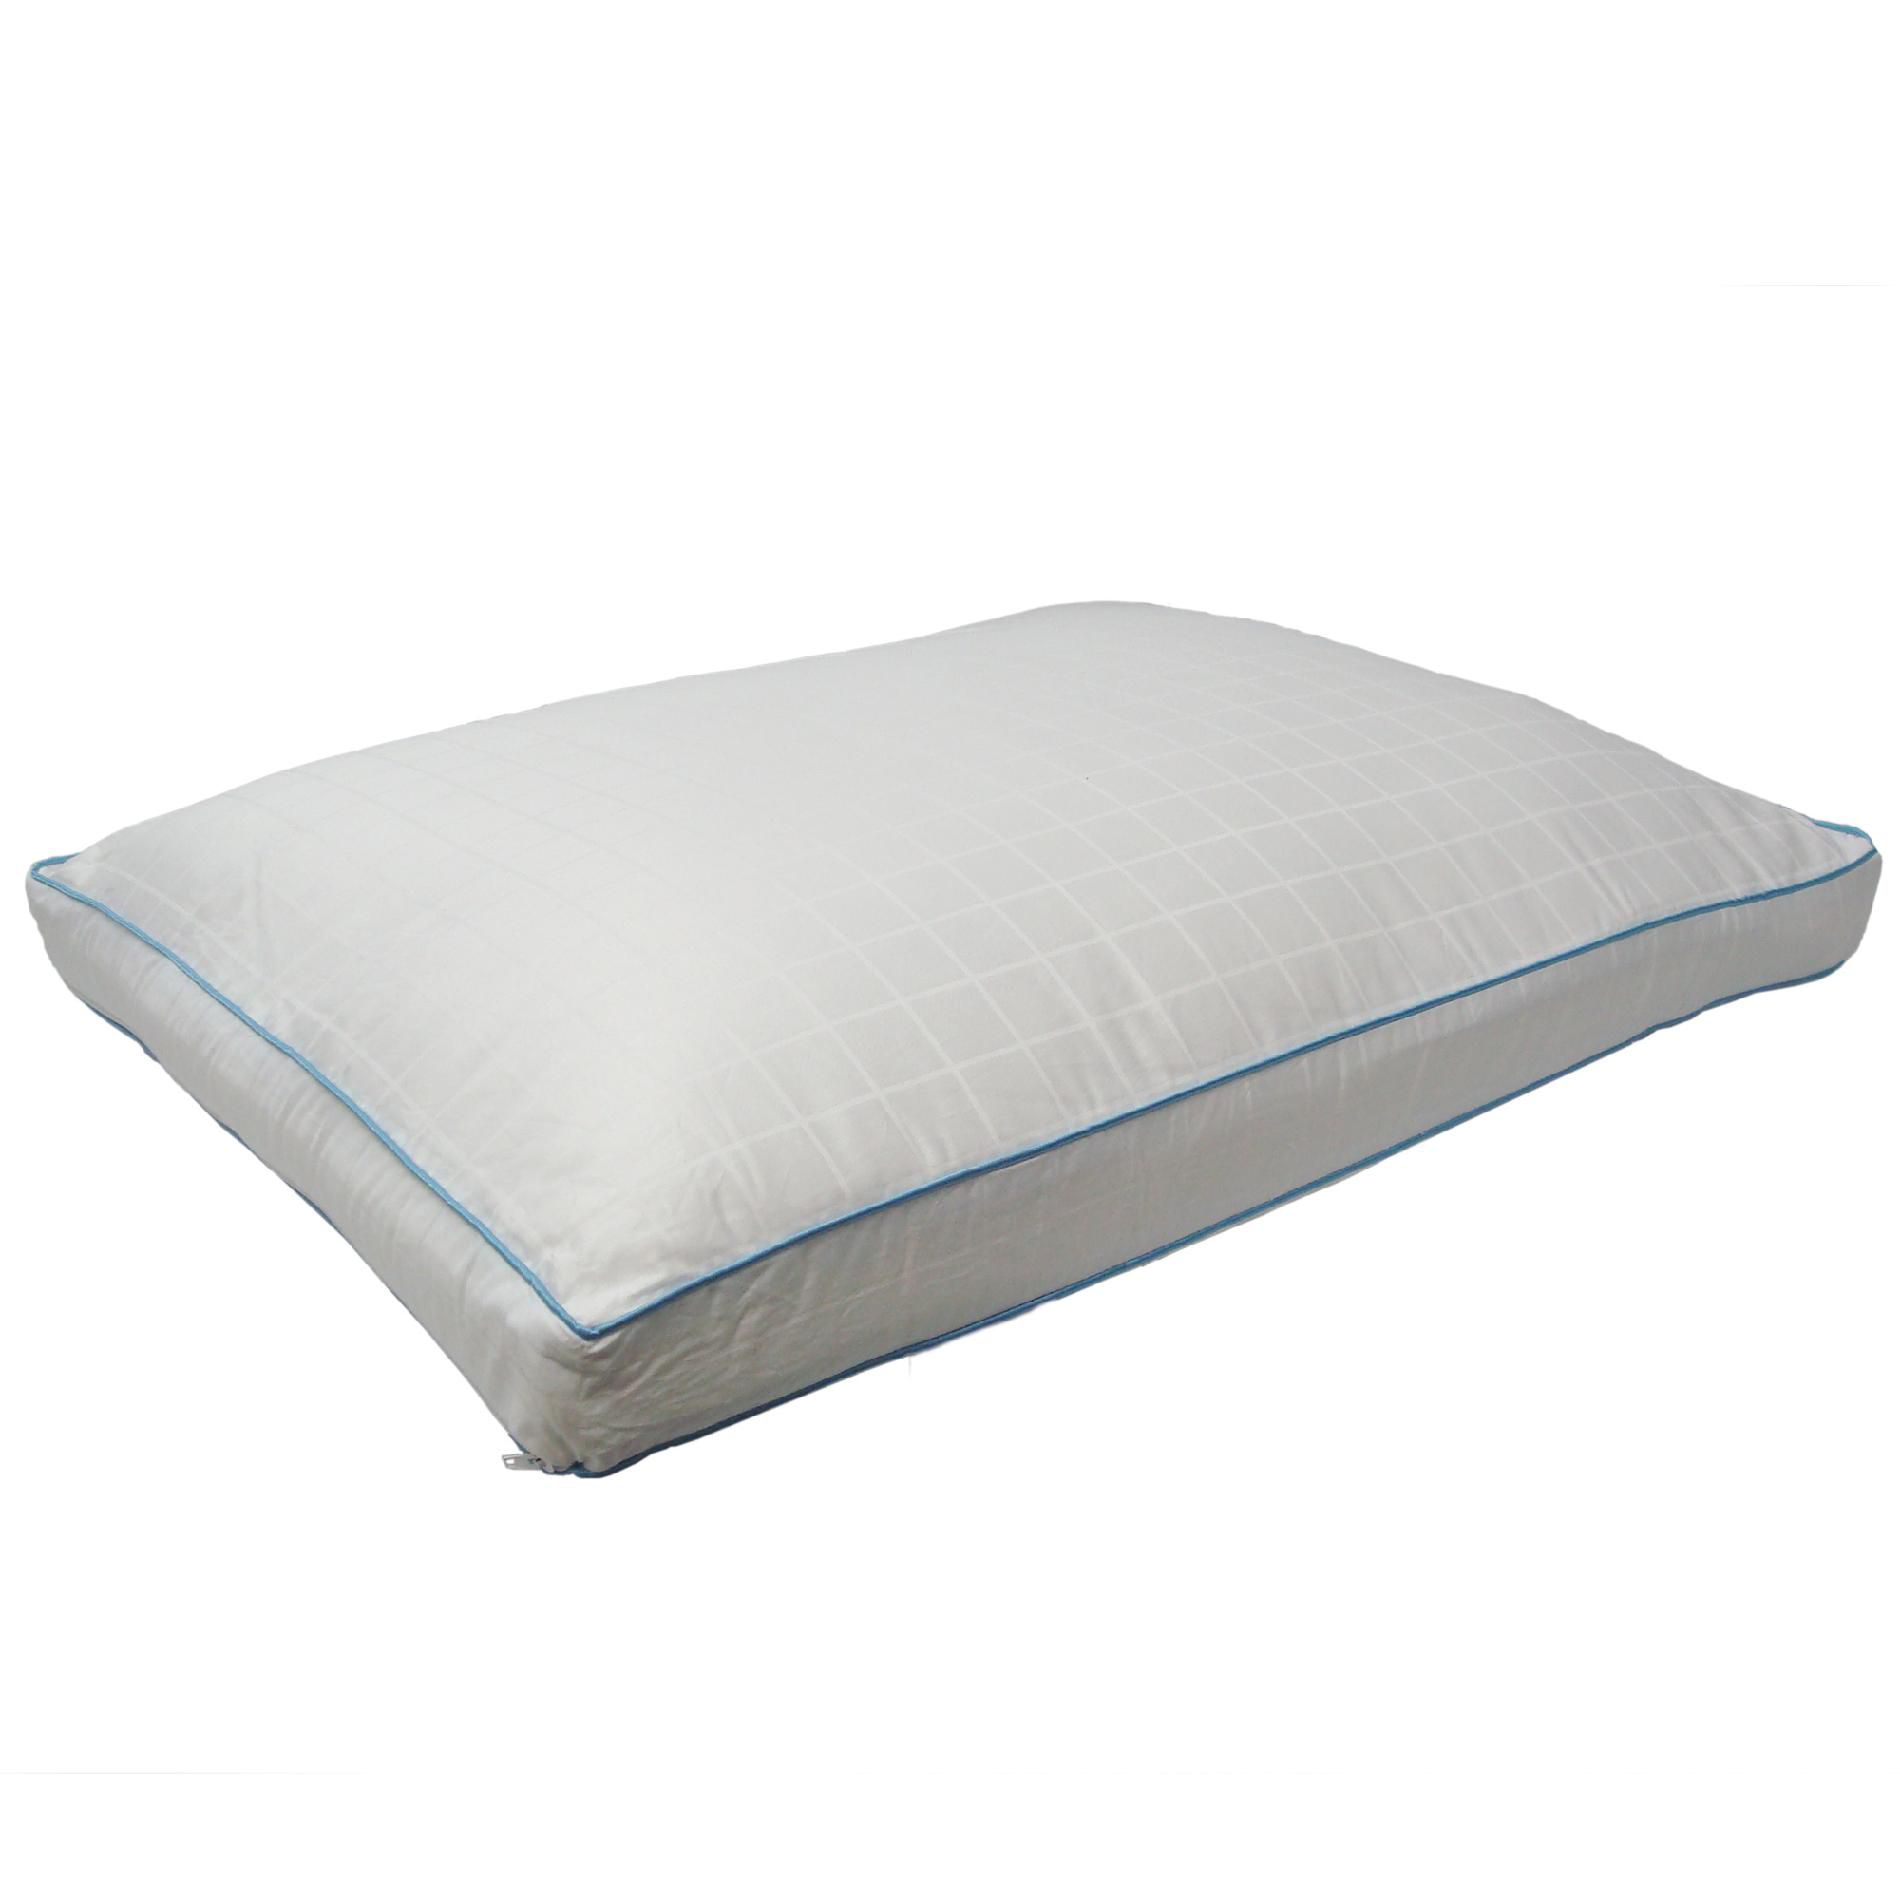 Beautyrest Microdown Memory Foam Standard Pillow